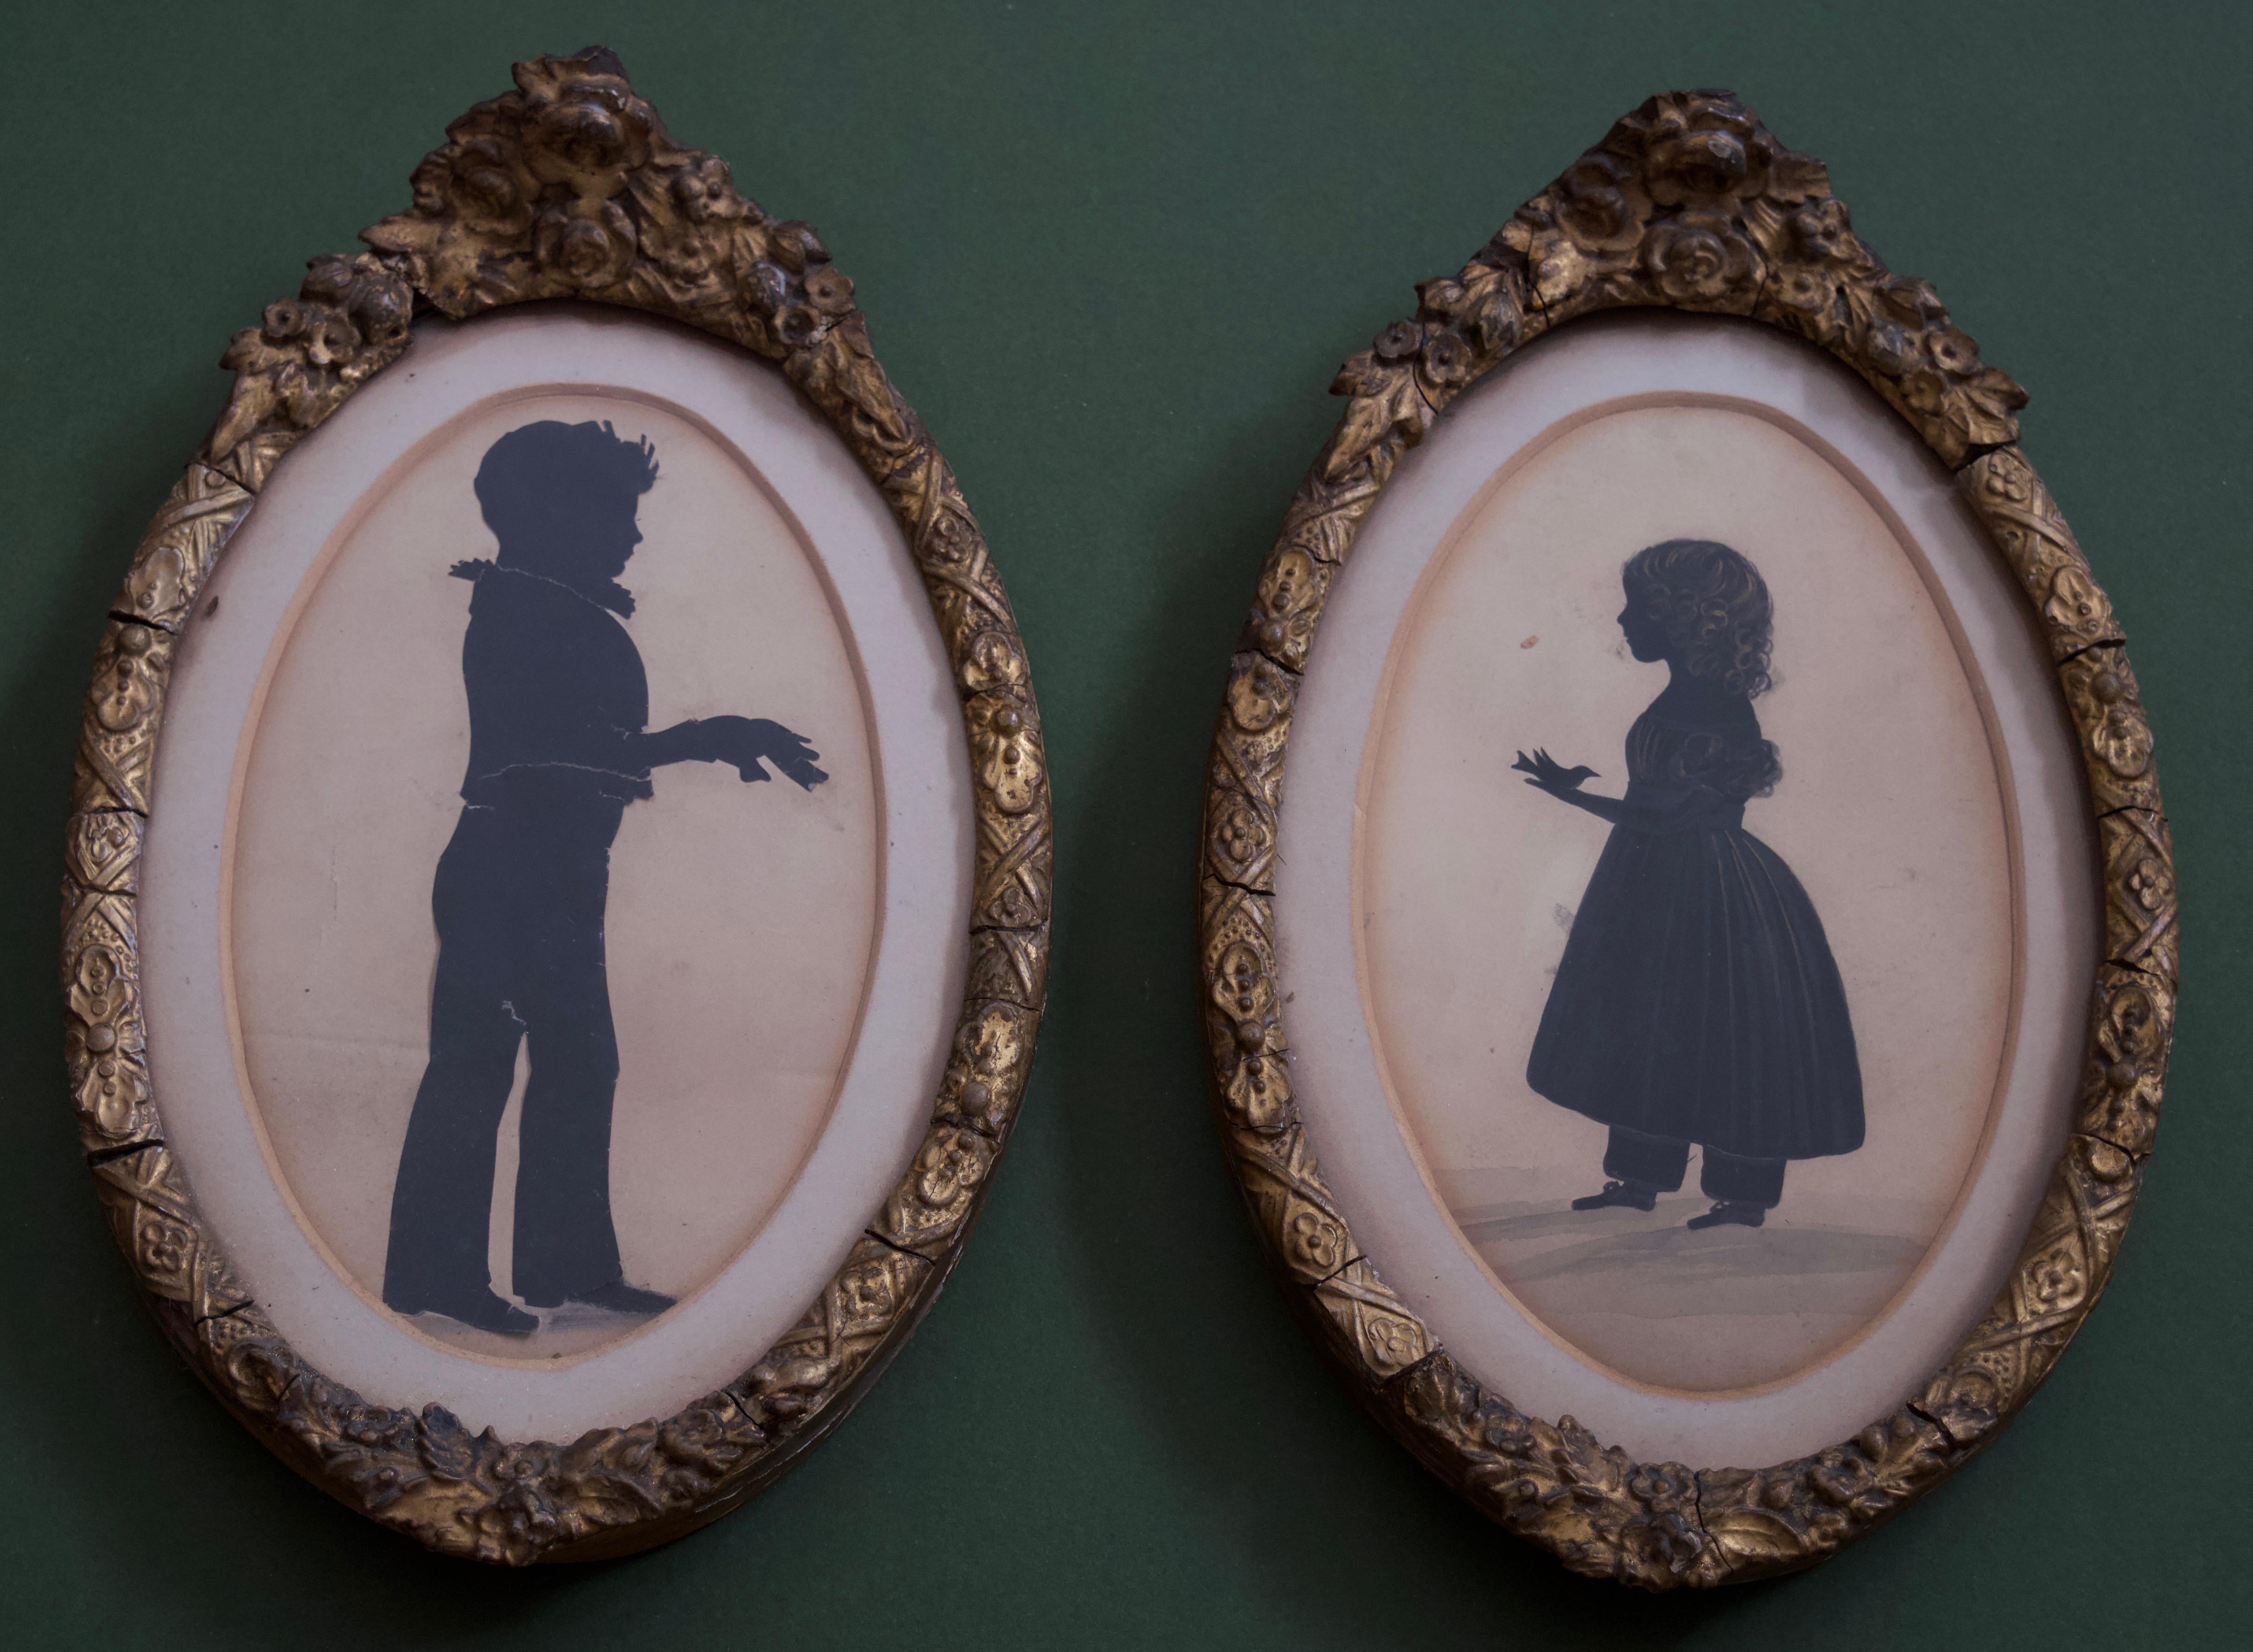 19th century silhouettes